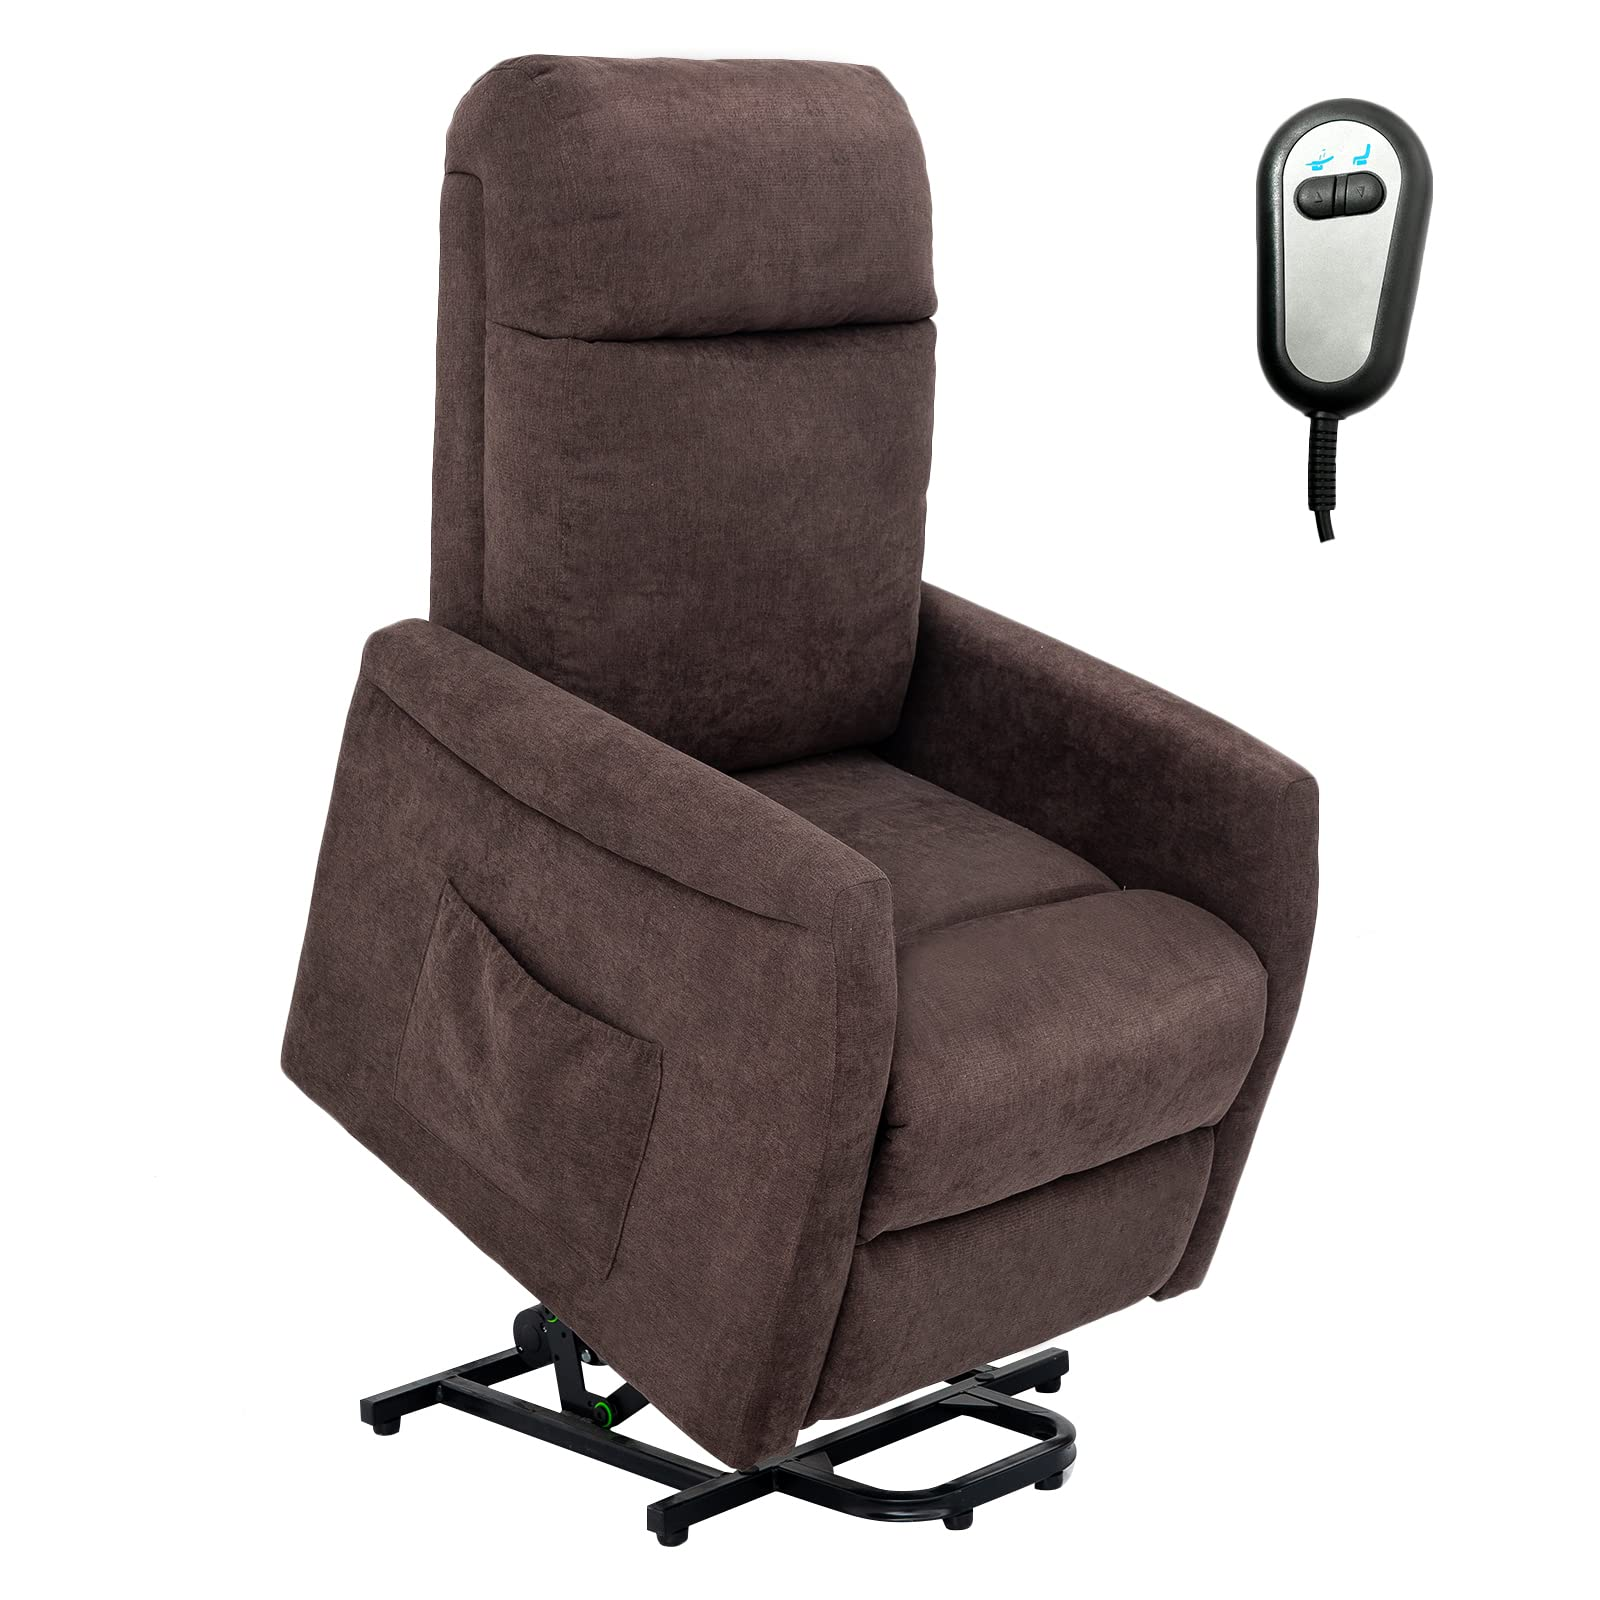 Giantex Power Lift Recliner Chair for Elderly, Ergonomic Lounge Chair